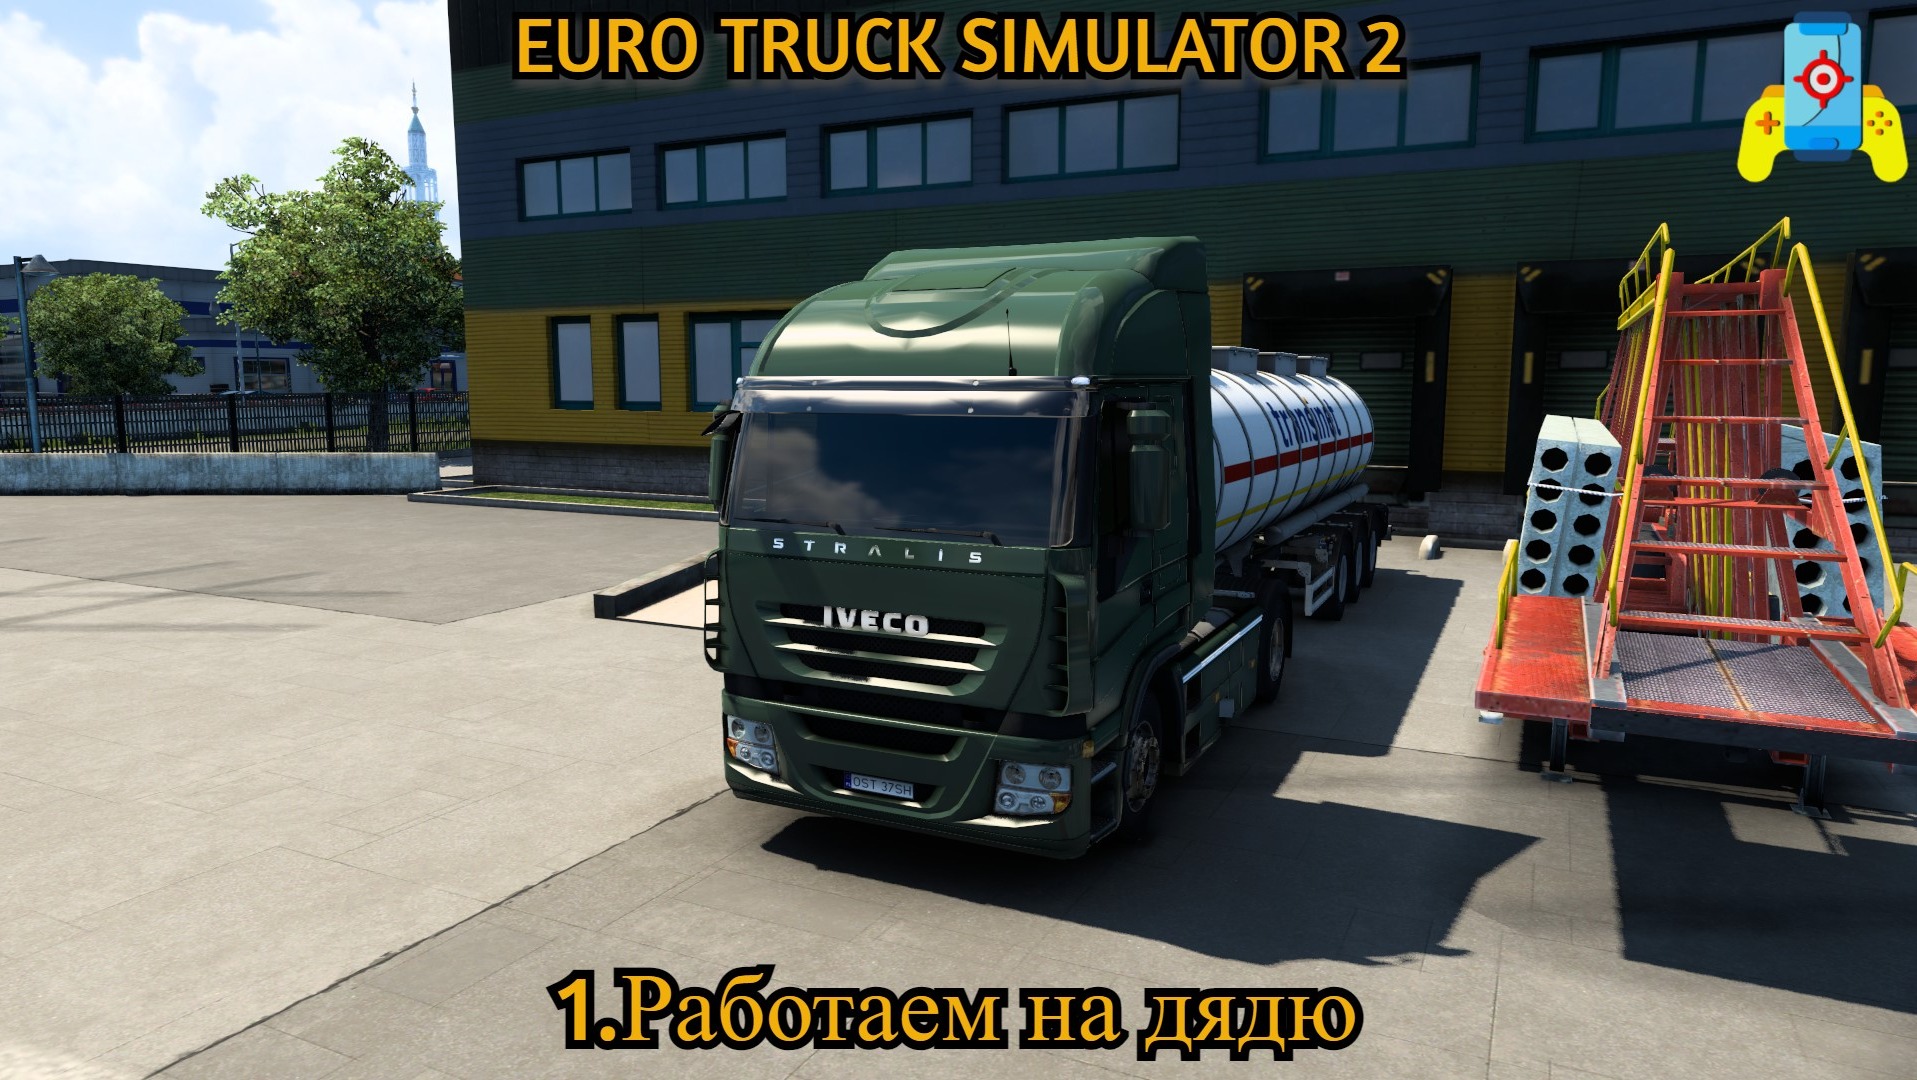 The Euro Truck Simulator 2 №1